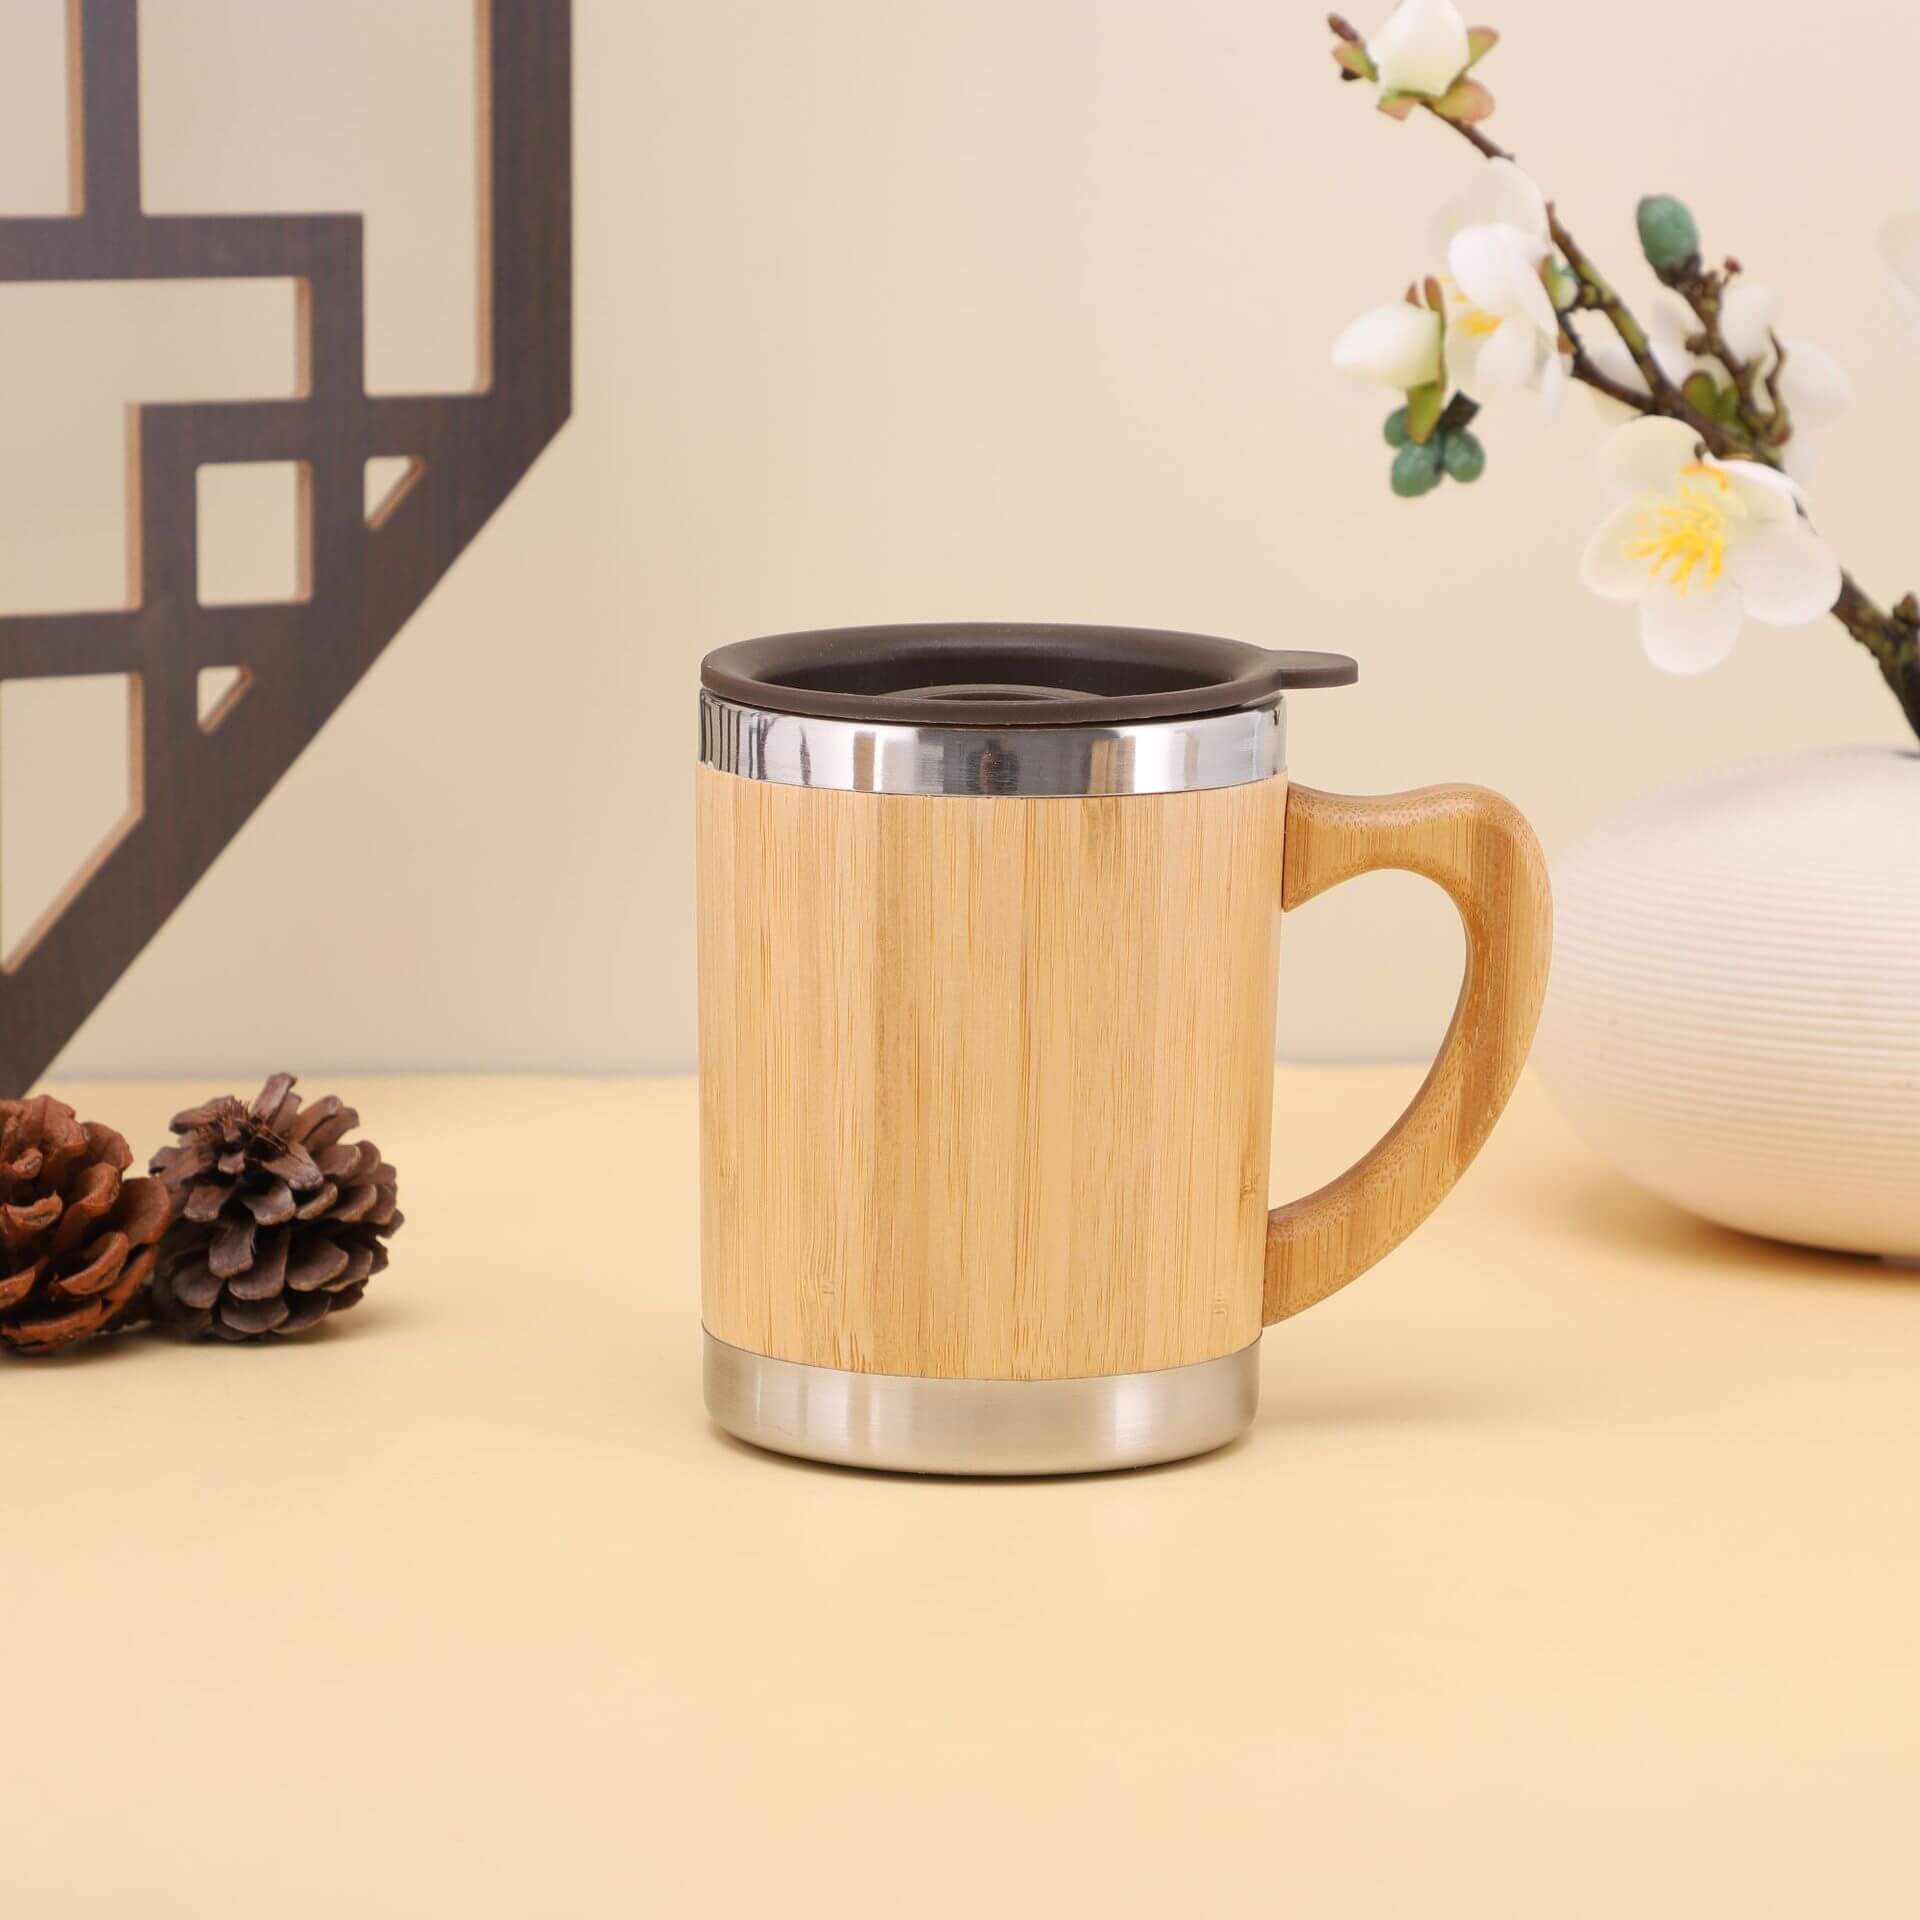 Ervan Insulated Stainless Steel Coffee Mug 